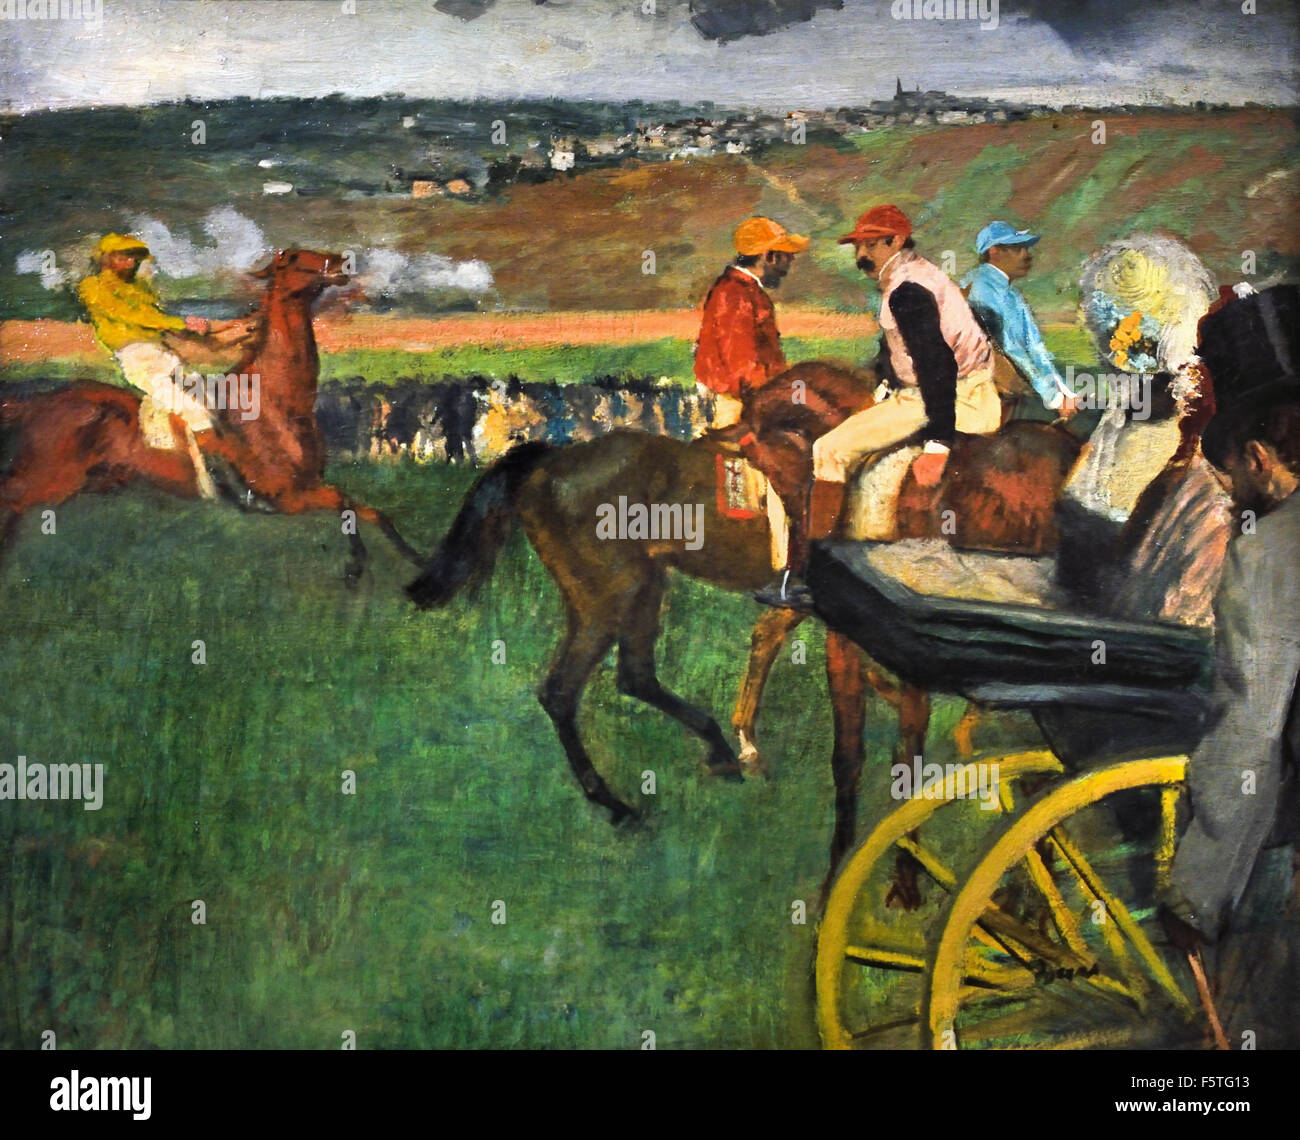 La pista de carreras de camellos cerca de un carro 1887 Edgar Degas 1834-1917 Francia Foto de stock